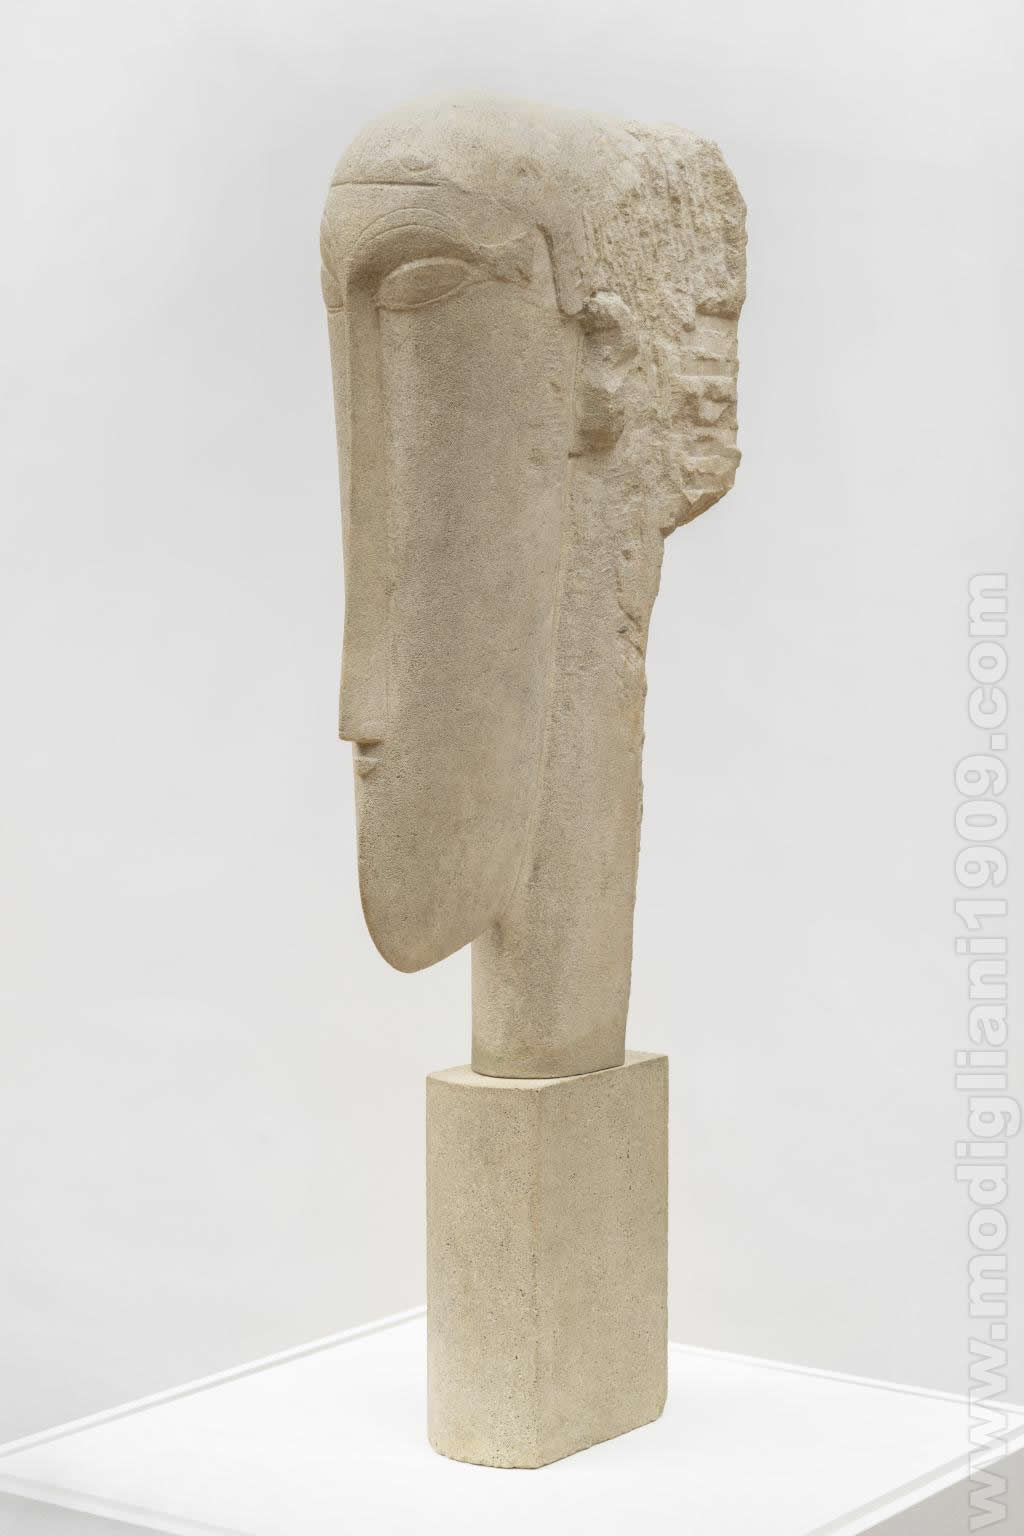 Head (left side), Amedeo Modigliani, 1911 - 1912, Limestone, Tate Modern, London